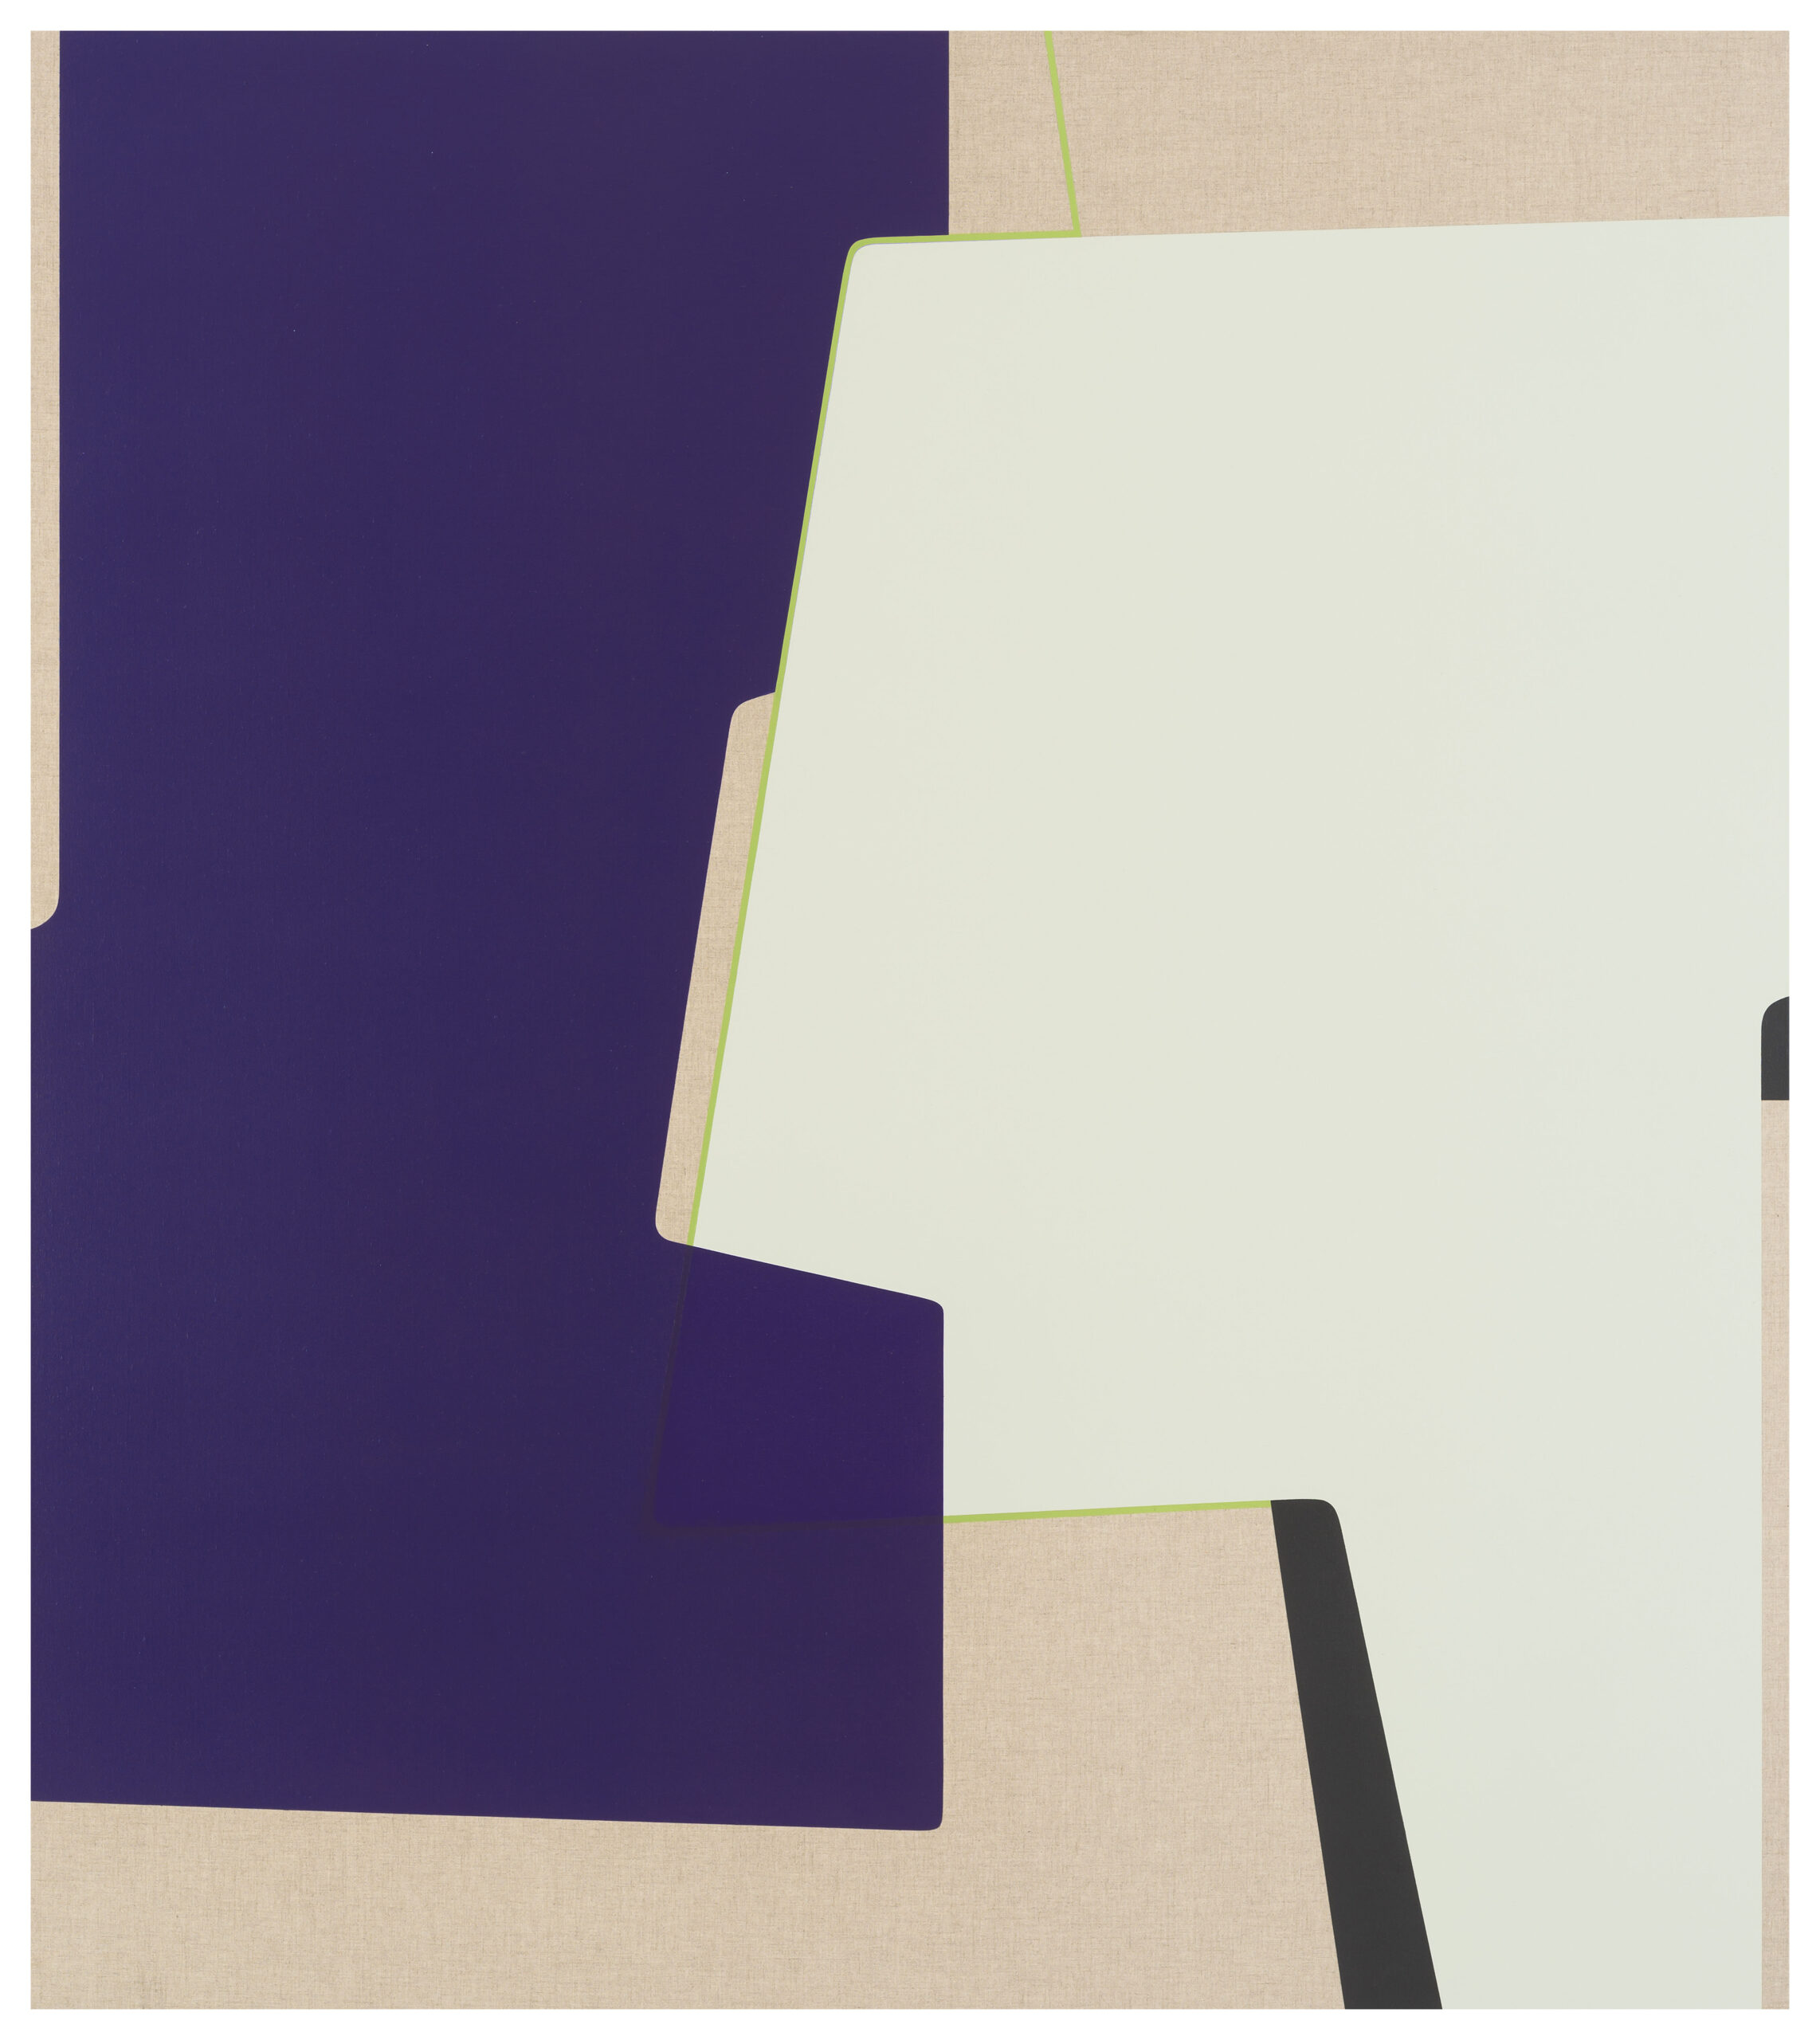 Matthew Browne 'Trumspringa' vinyl tempera & oil on linen 180 x 160cm $19,000